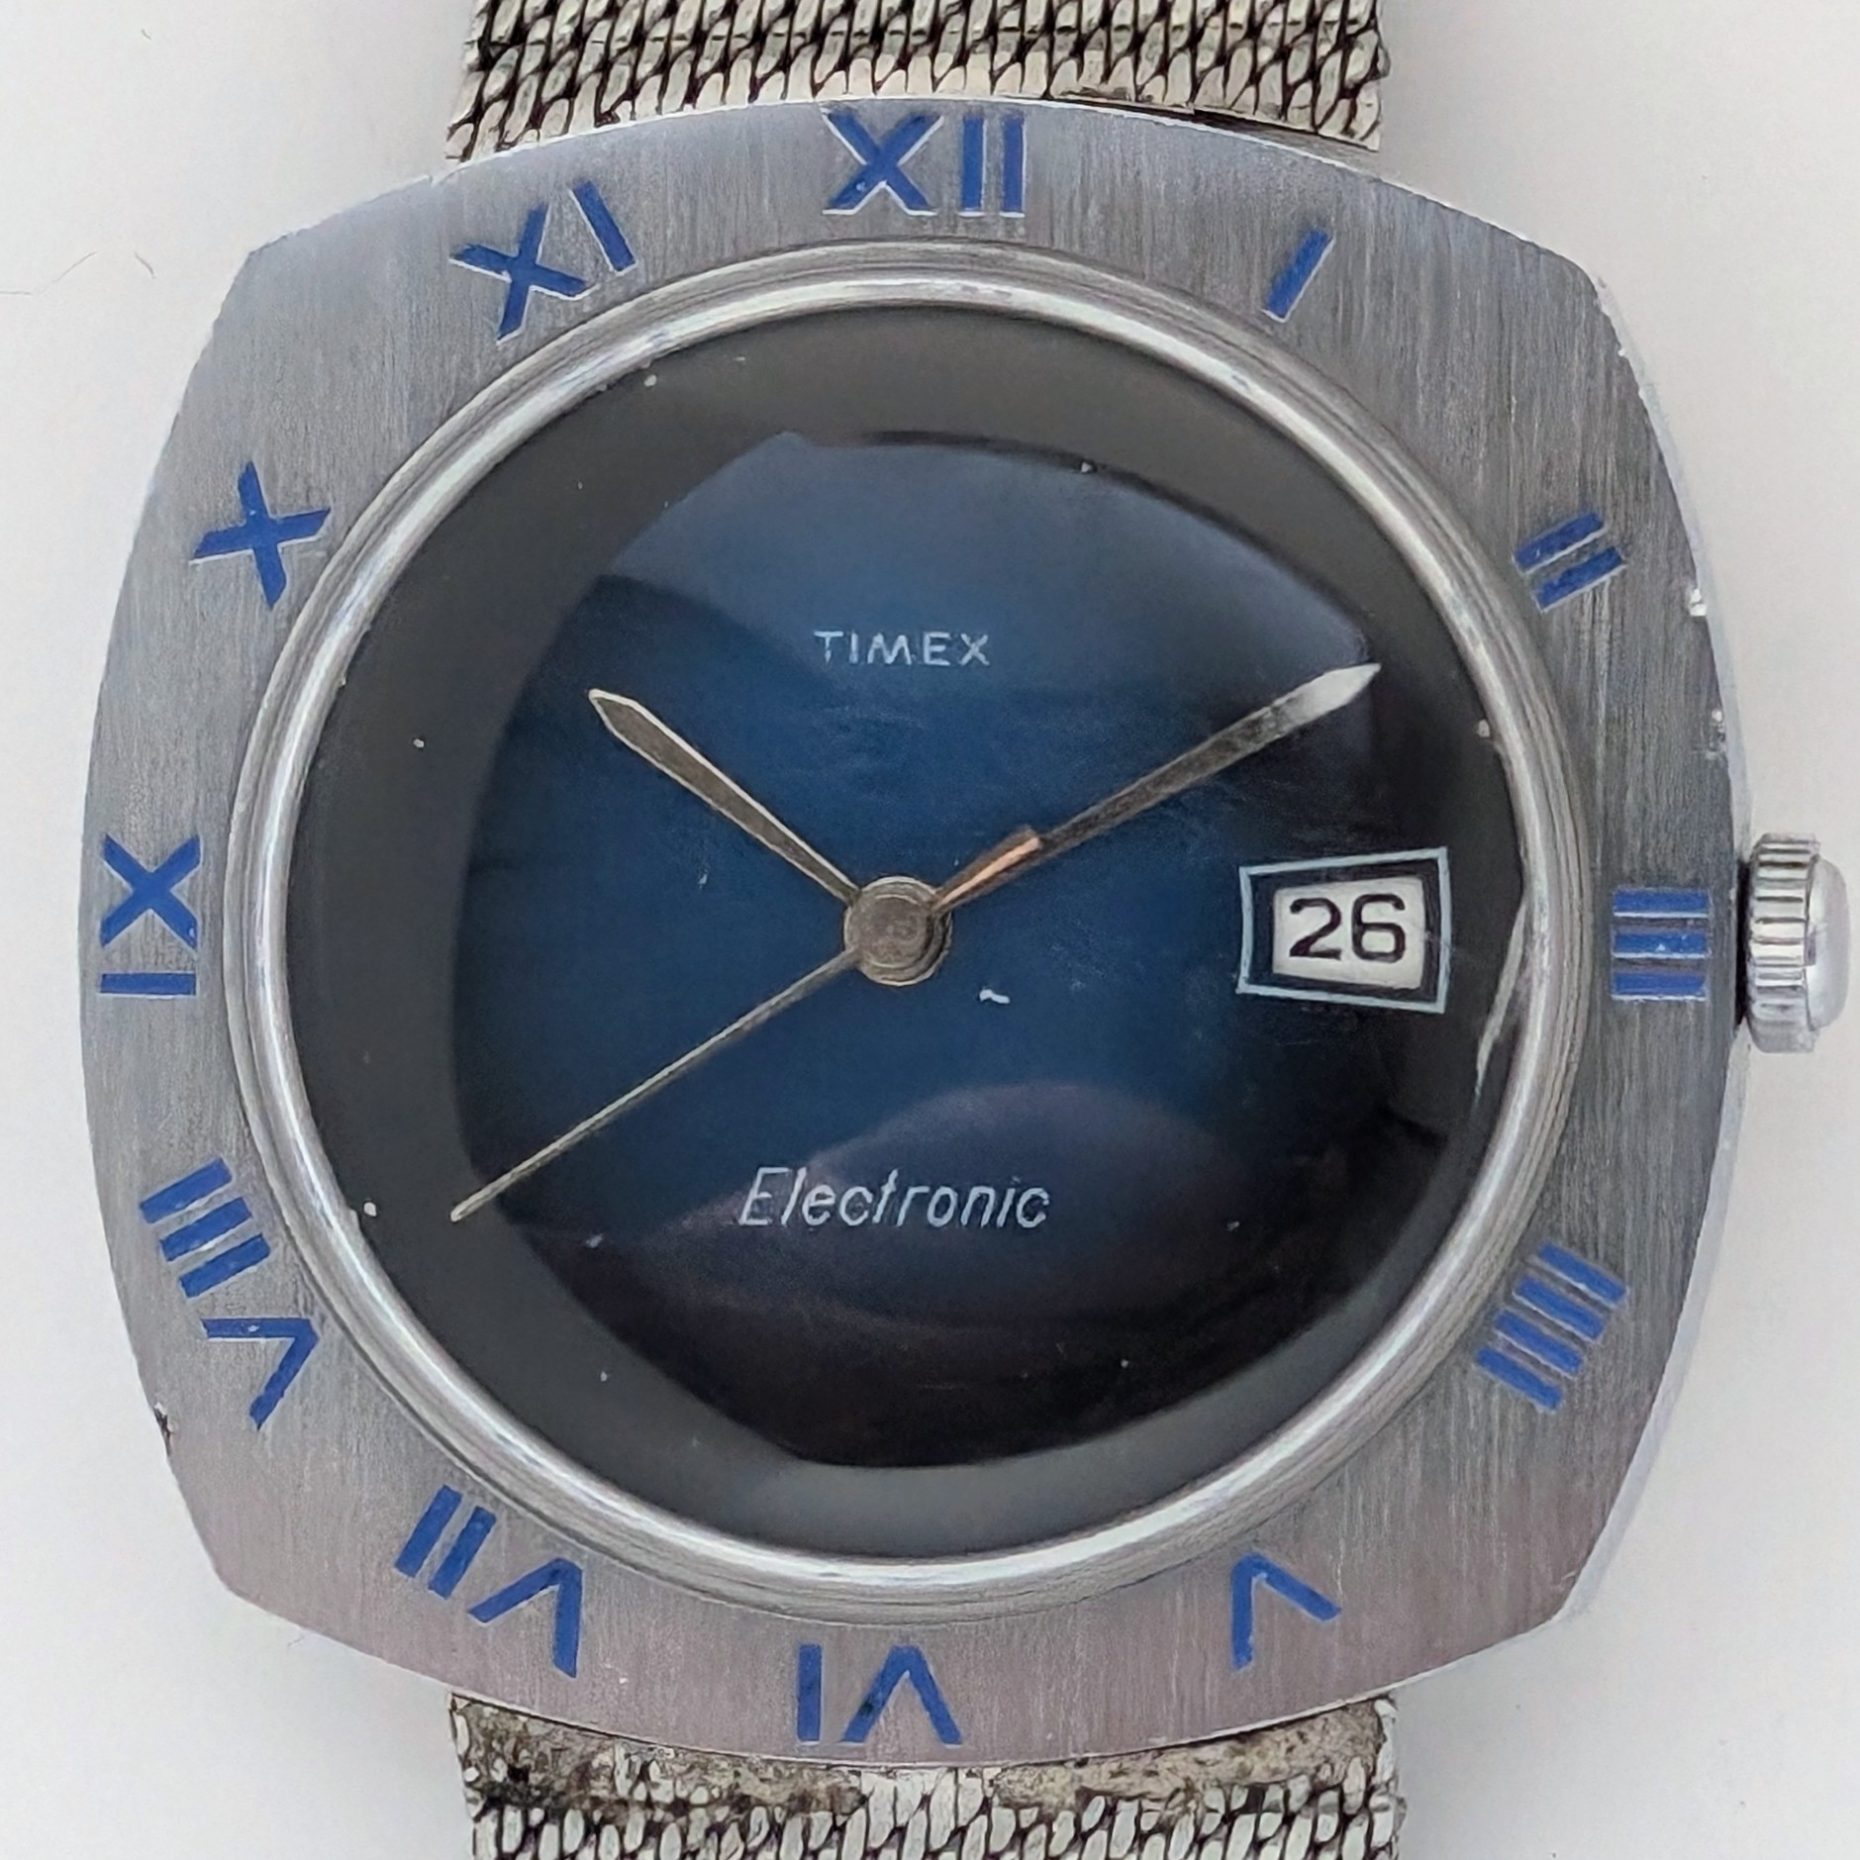 Timex Electronic Calendar 1973 Ref. 77750 5173